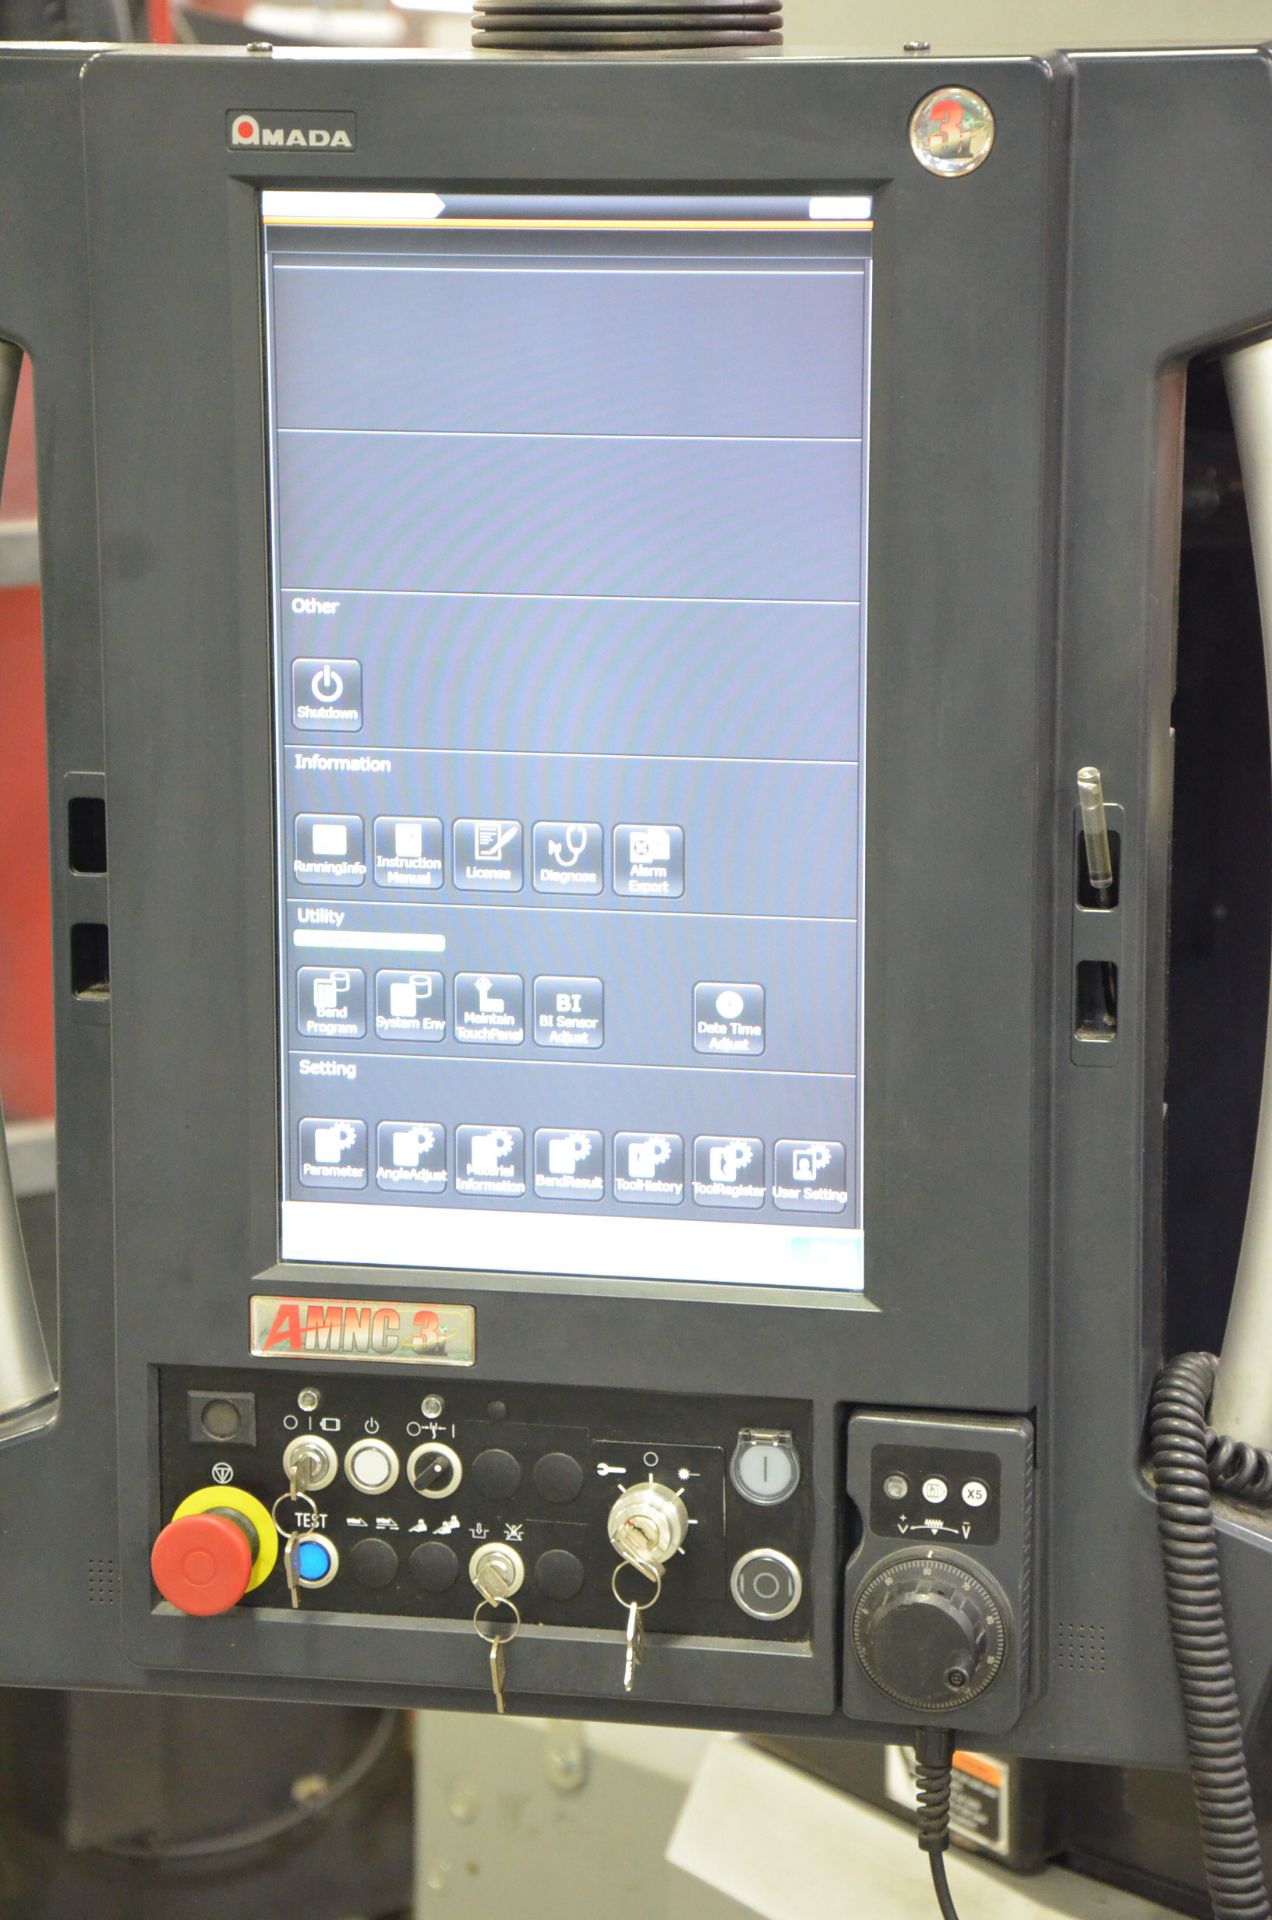 AMADA (2014) HG8025 CNC 8 AXIS SERVO-HYDRAULIC BRAKE PRESS WITH AMADA AMNC 3I CNC TOUCH SCREEN - Image 11 of 19